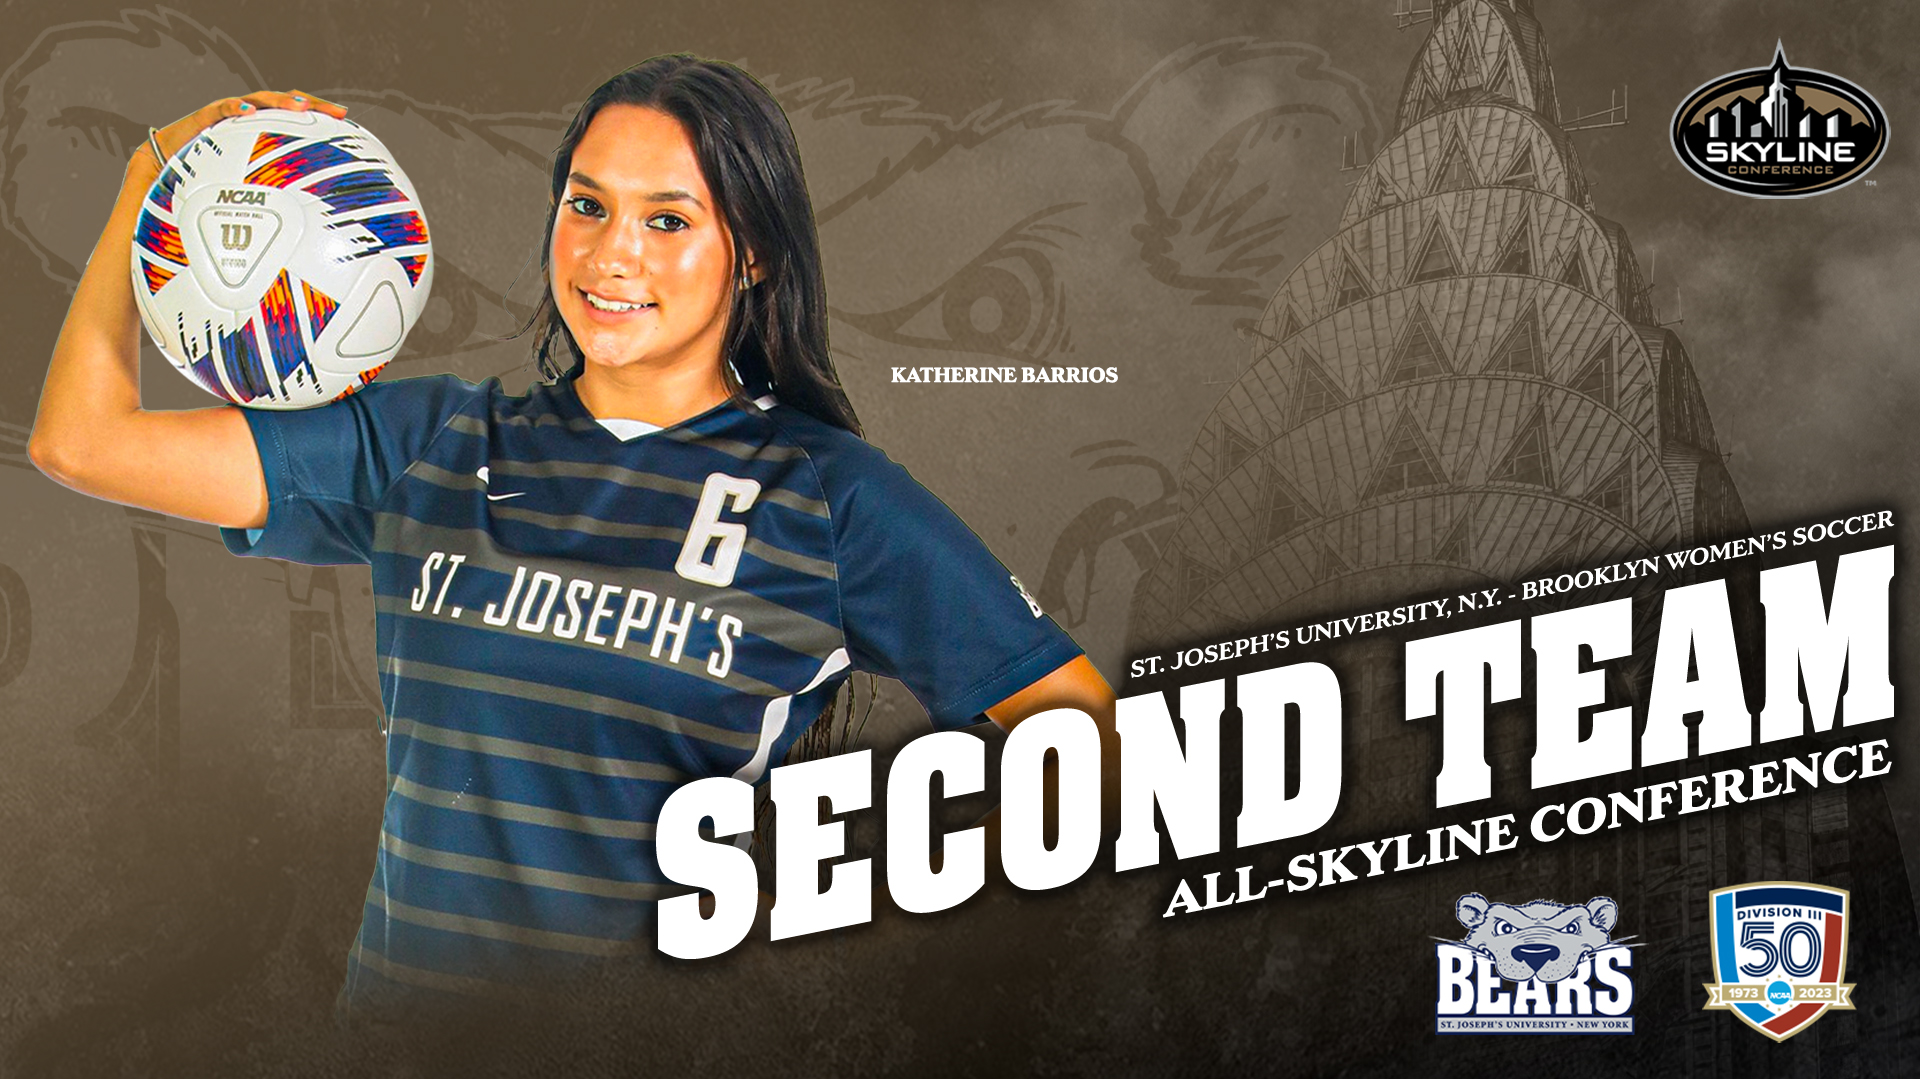 Barrios Placed on All-Skyline Women’s Soccer Second Team